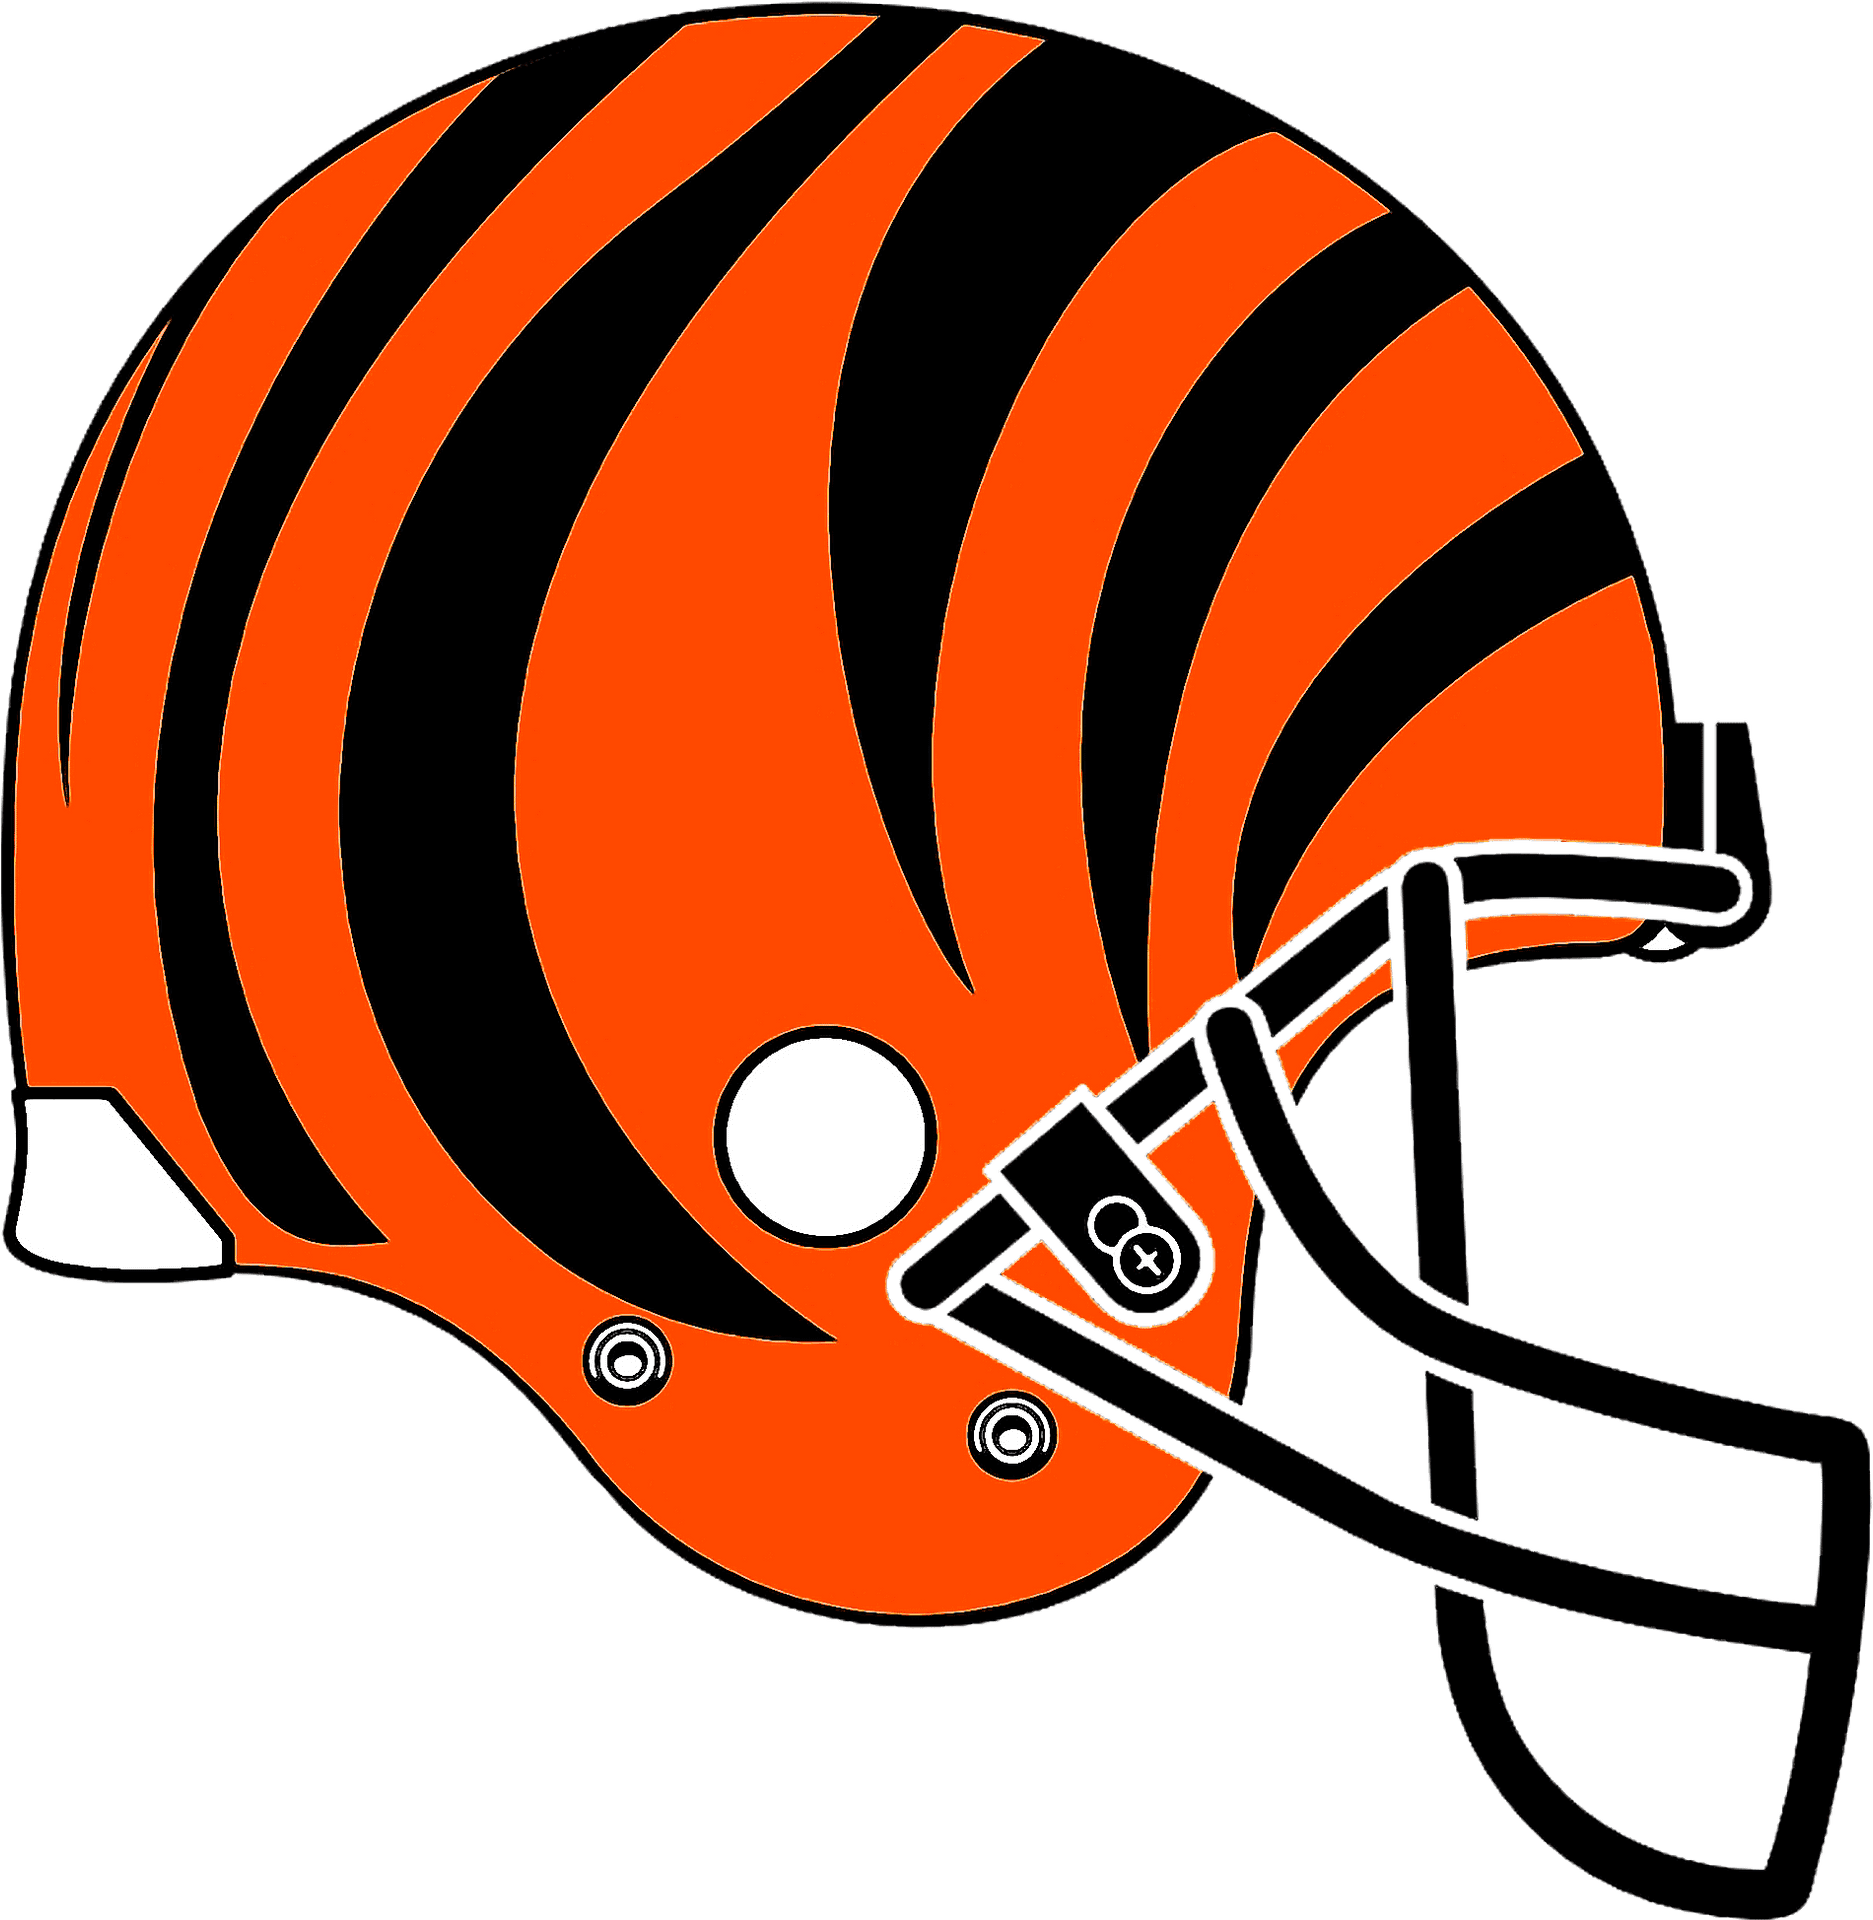 Cincinnati Football Helmet Graphic PNG image